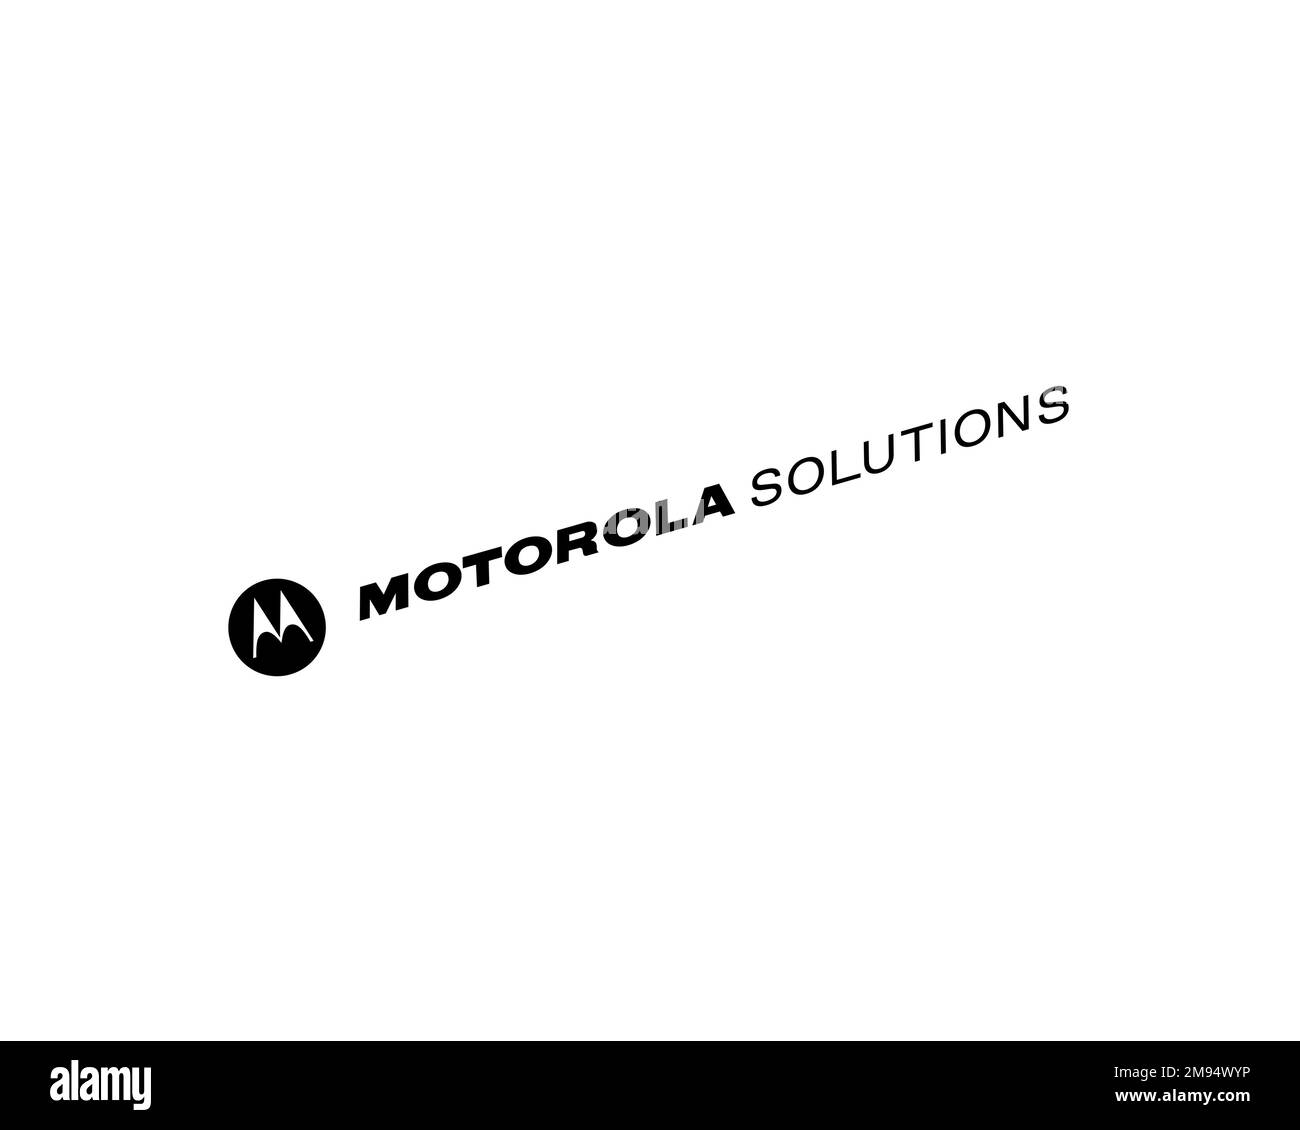 Motorola Solutions, logo ruotato, sfondo bianco Foto Stock